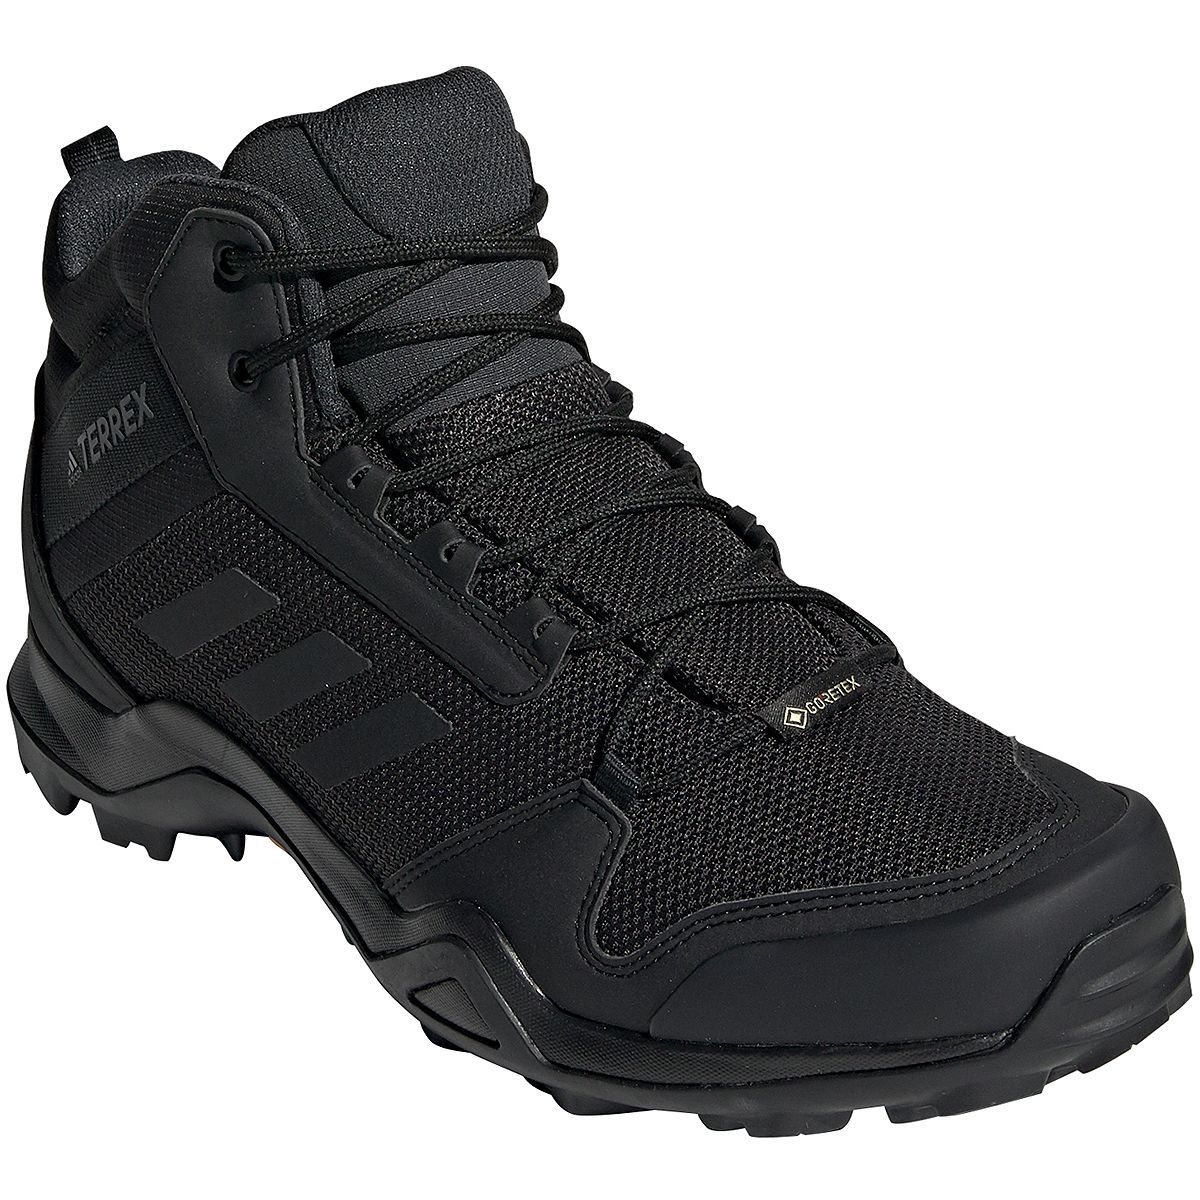 Adidas Outdoor Terrex AX3 Mid GTX Hiking Boot - Men's | eBay